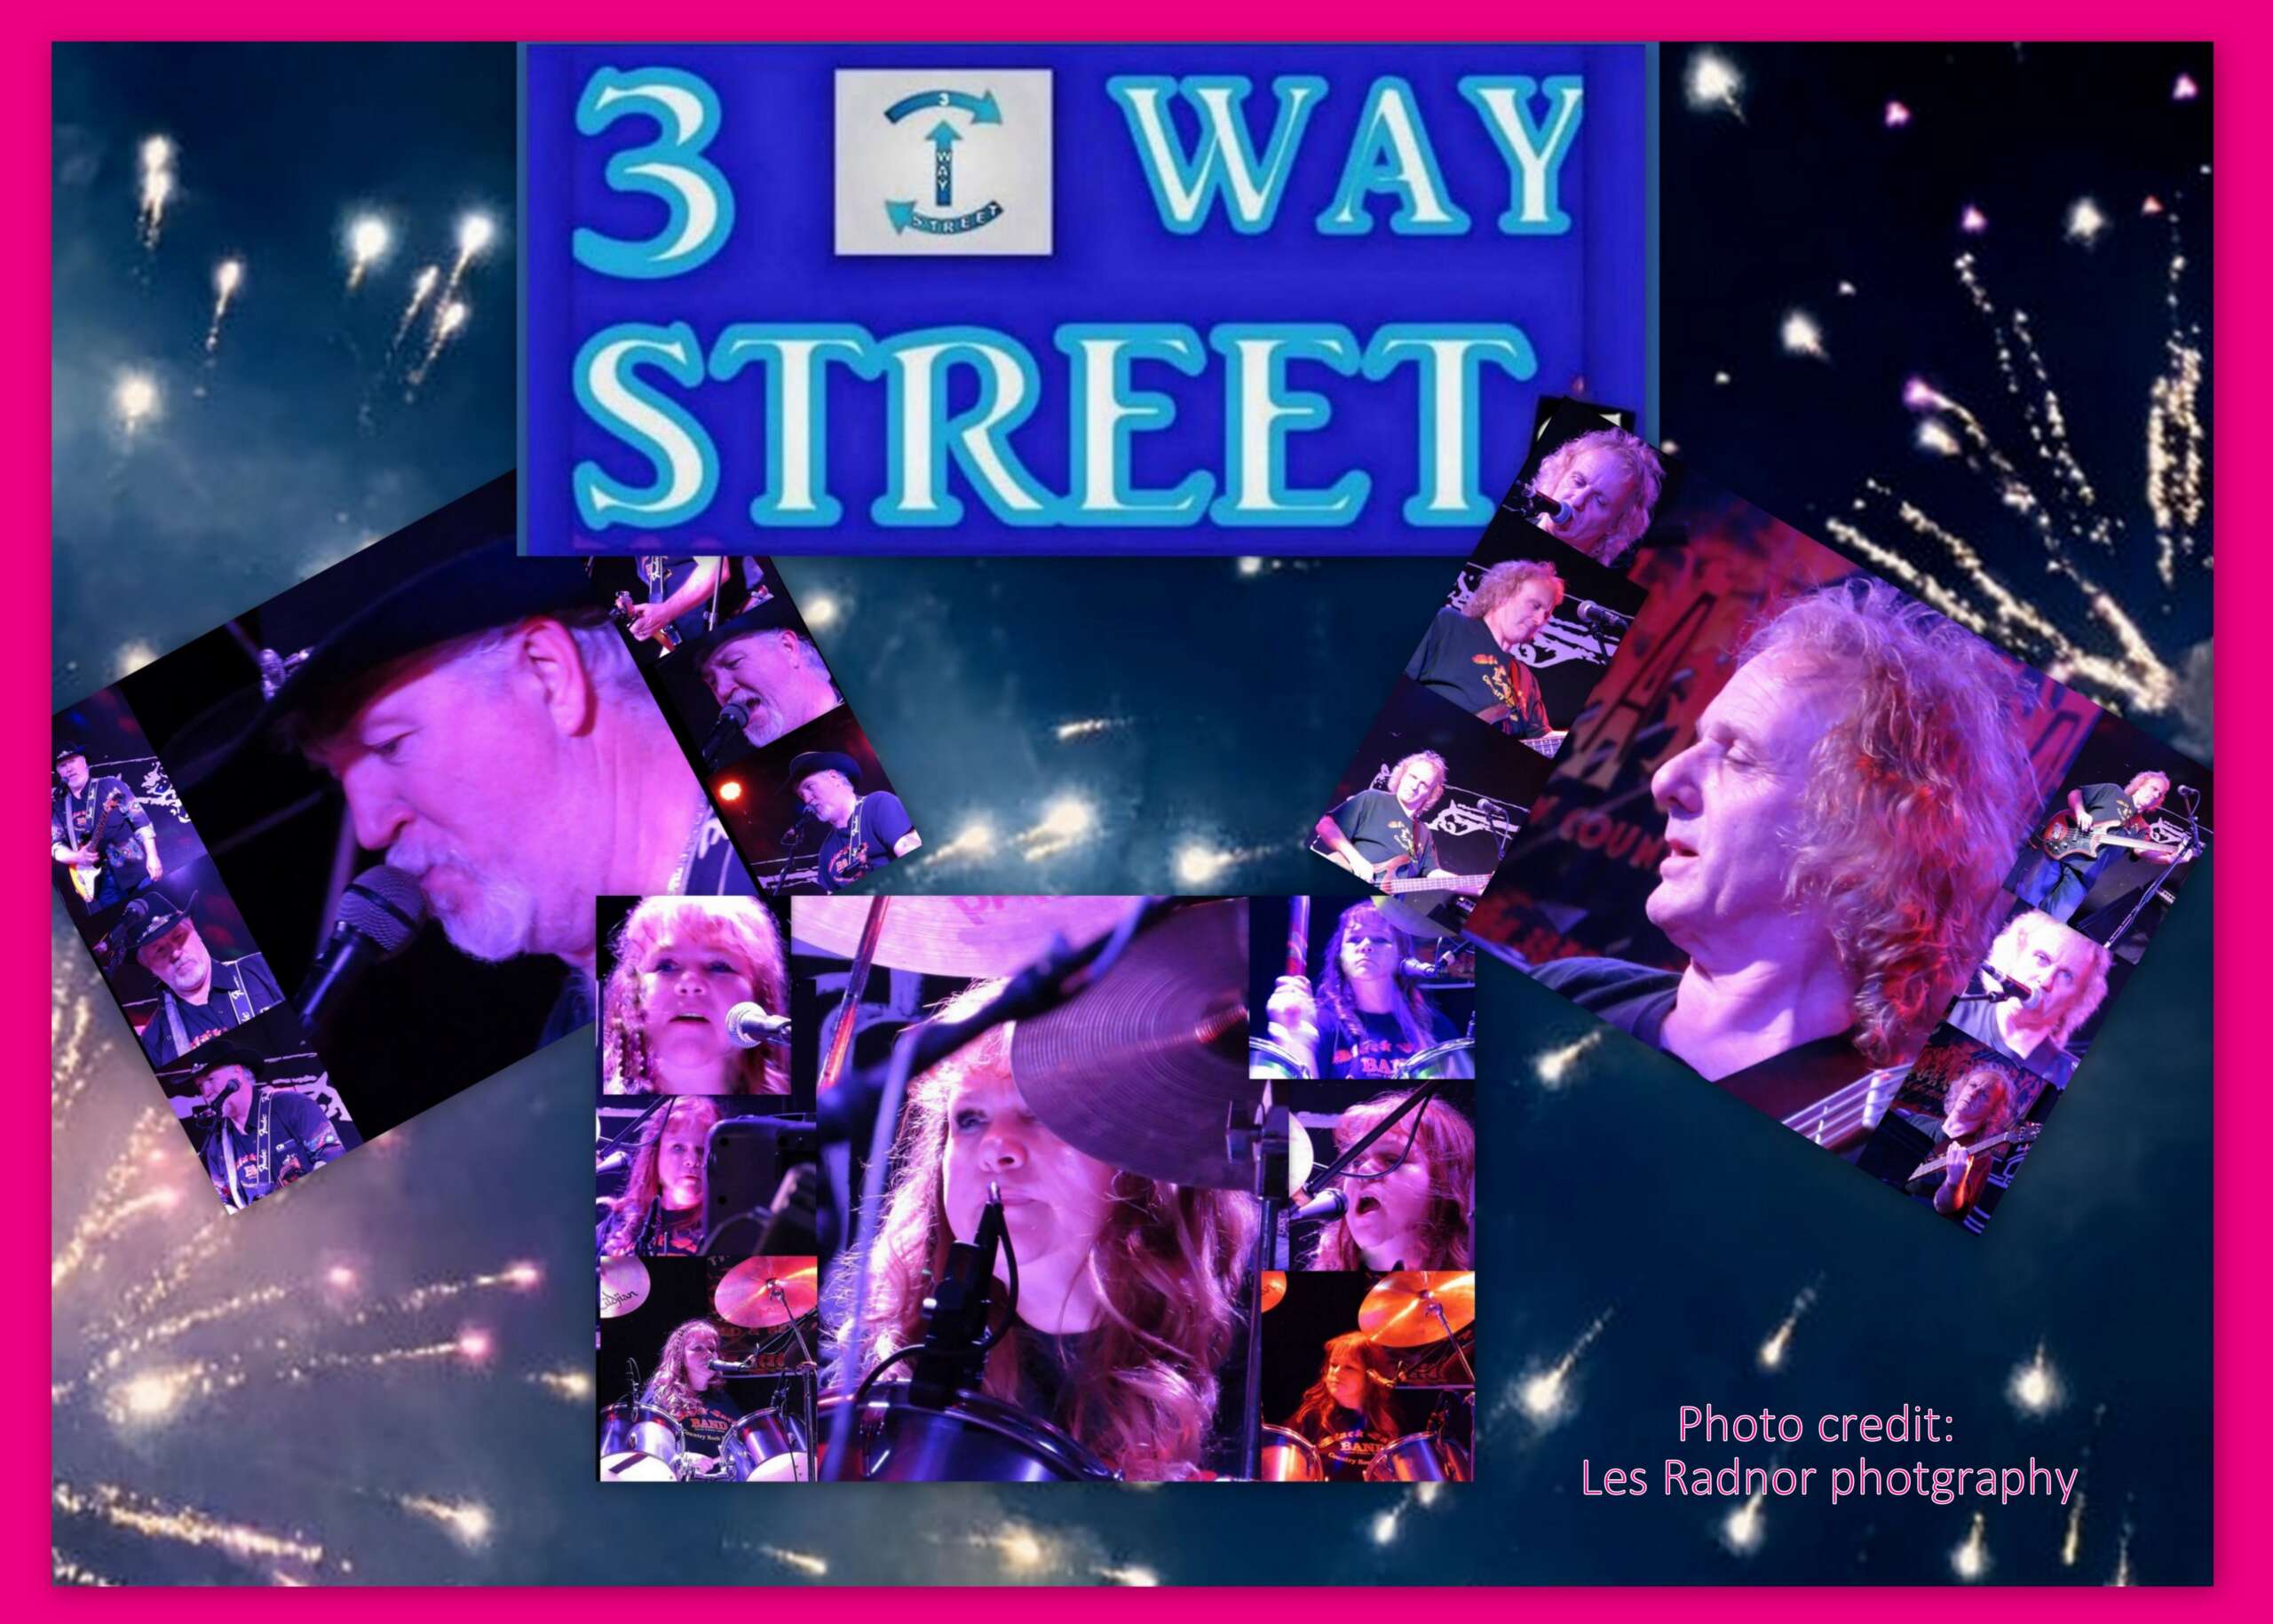 3 way street